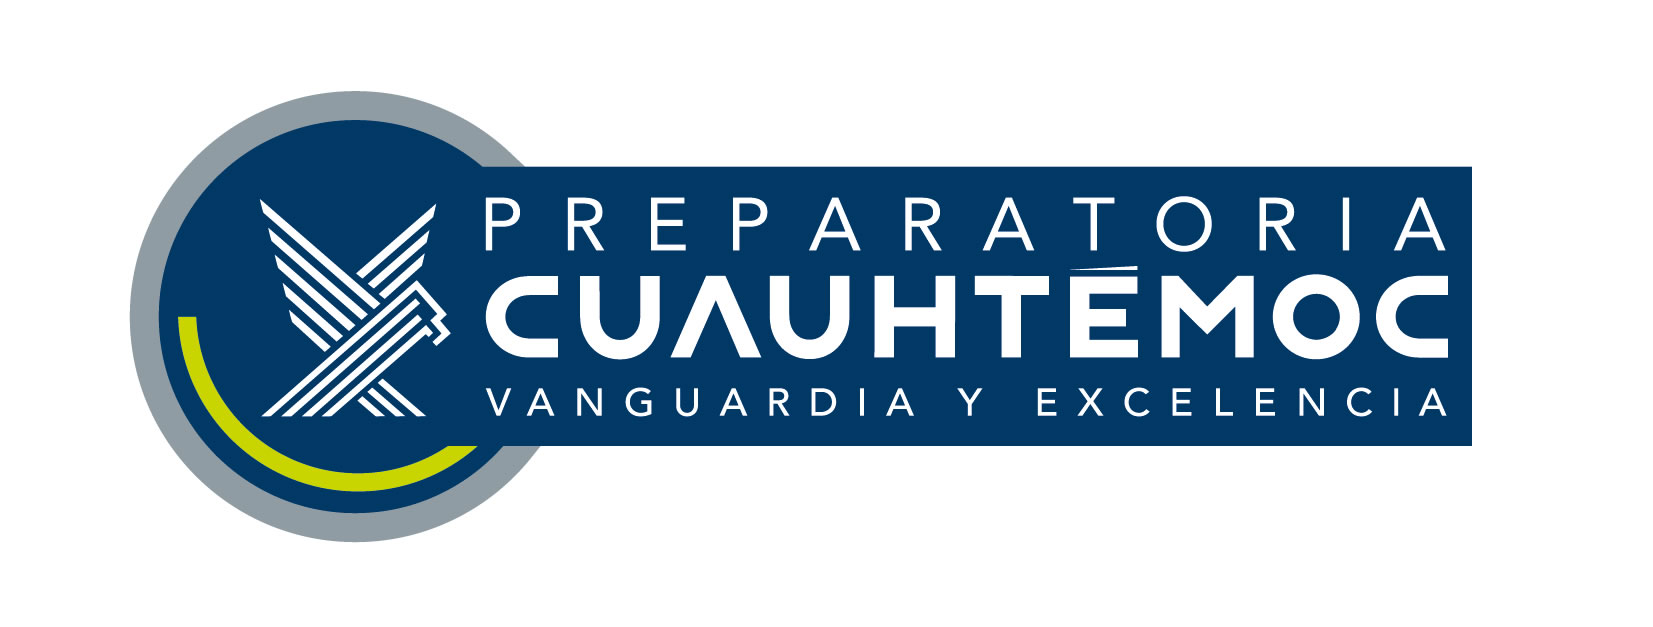 Universidad Cuauhtemoc Logo photo - 1